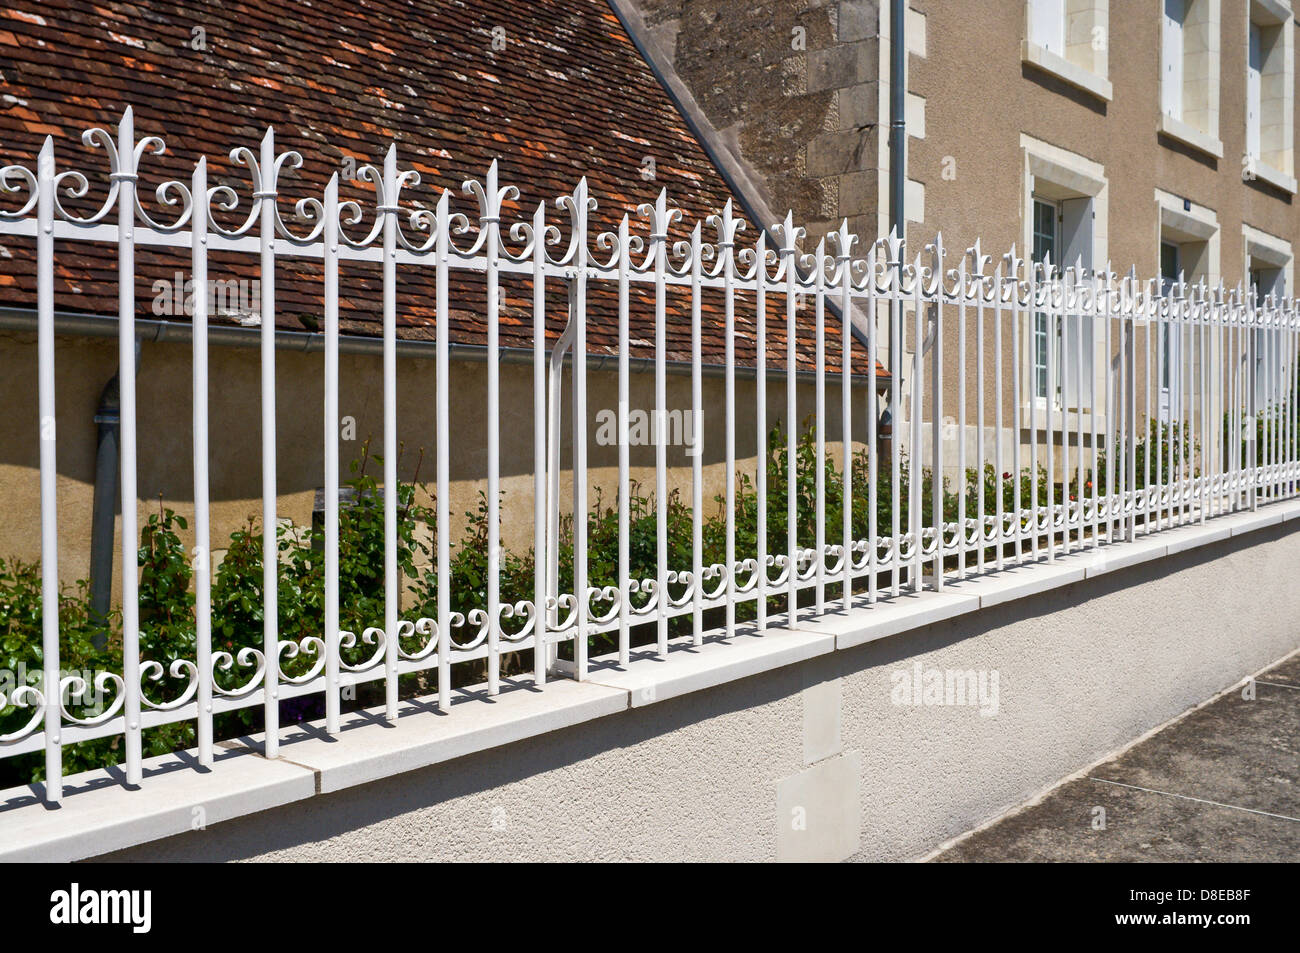 New, freshly painted iron garden railings - France. Stock Photo